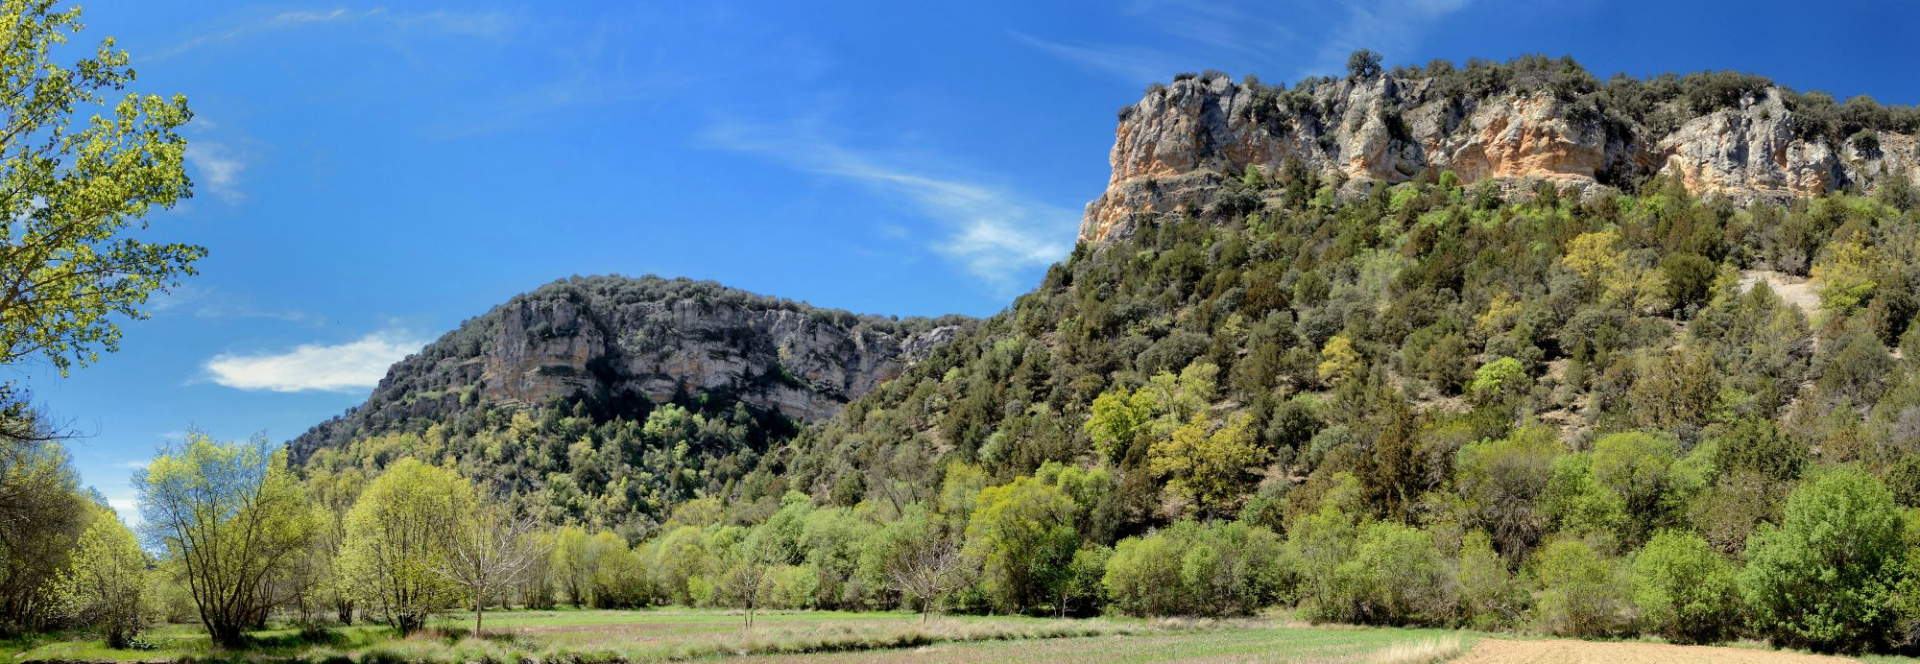 Valle del Mesa. Imagen: Geoparque Molina-Alto Tajo. Andoni Jurado